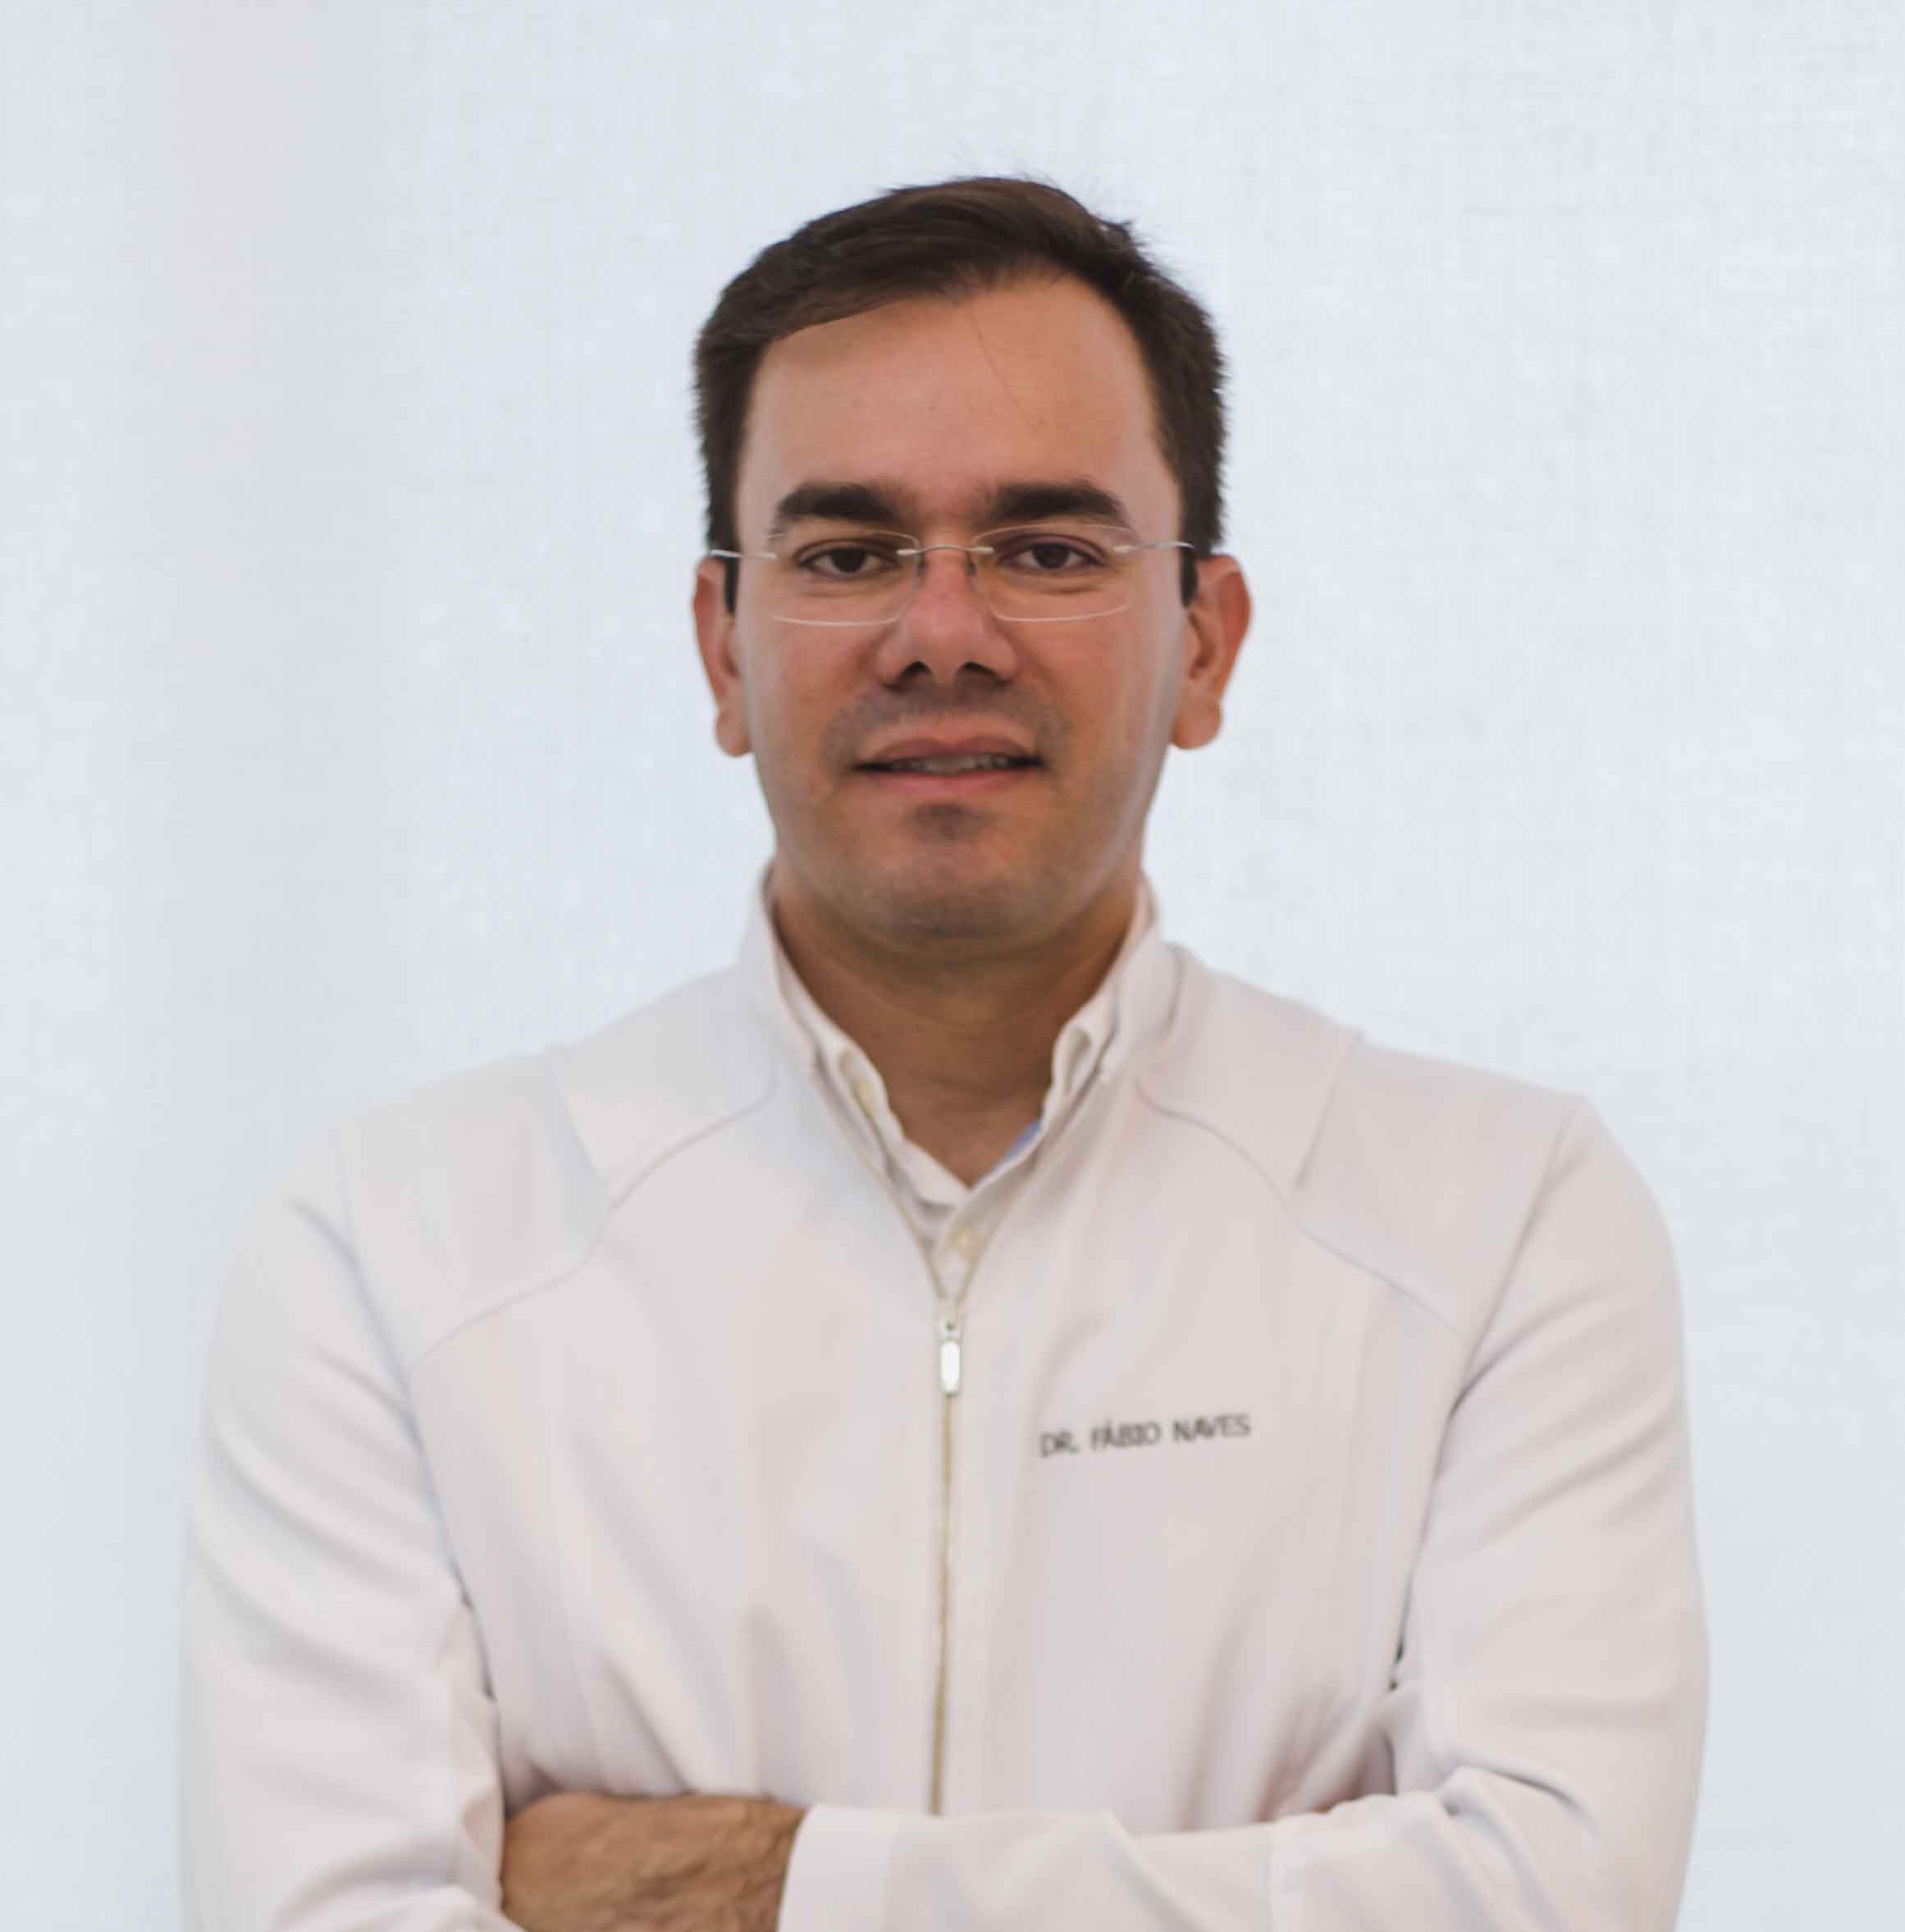 Dr. Fábio Naves